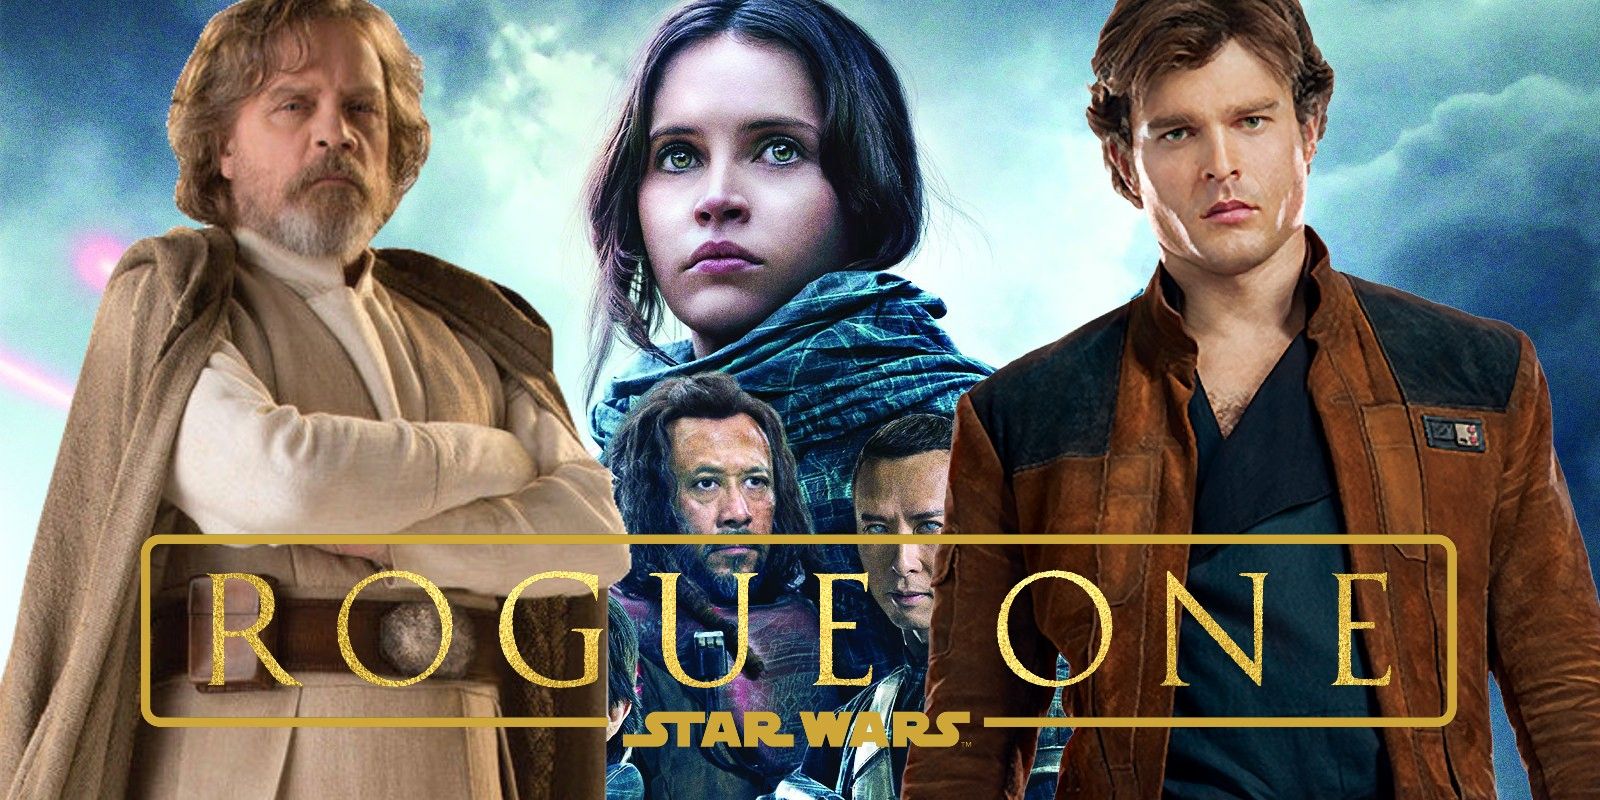 Rogue One header Mark Hamill as Luke Skywalker and Alden Ehrenreich as Han Solo